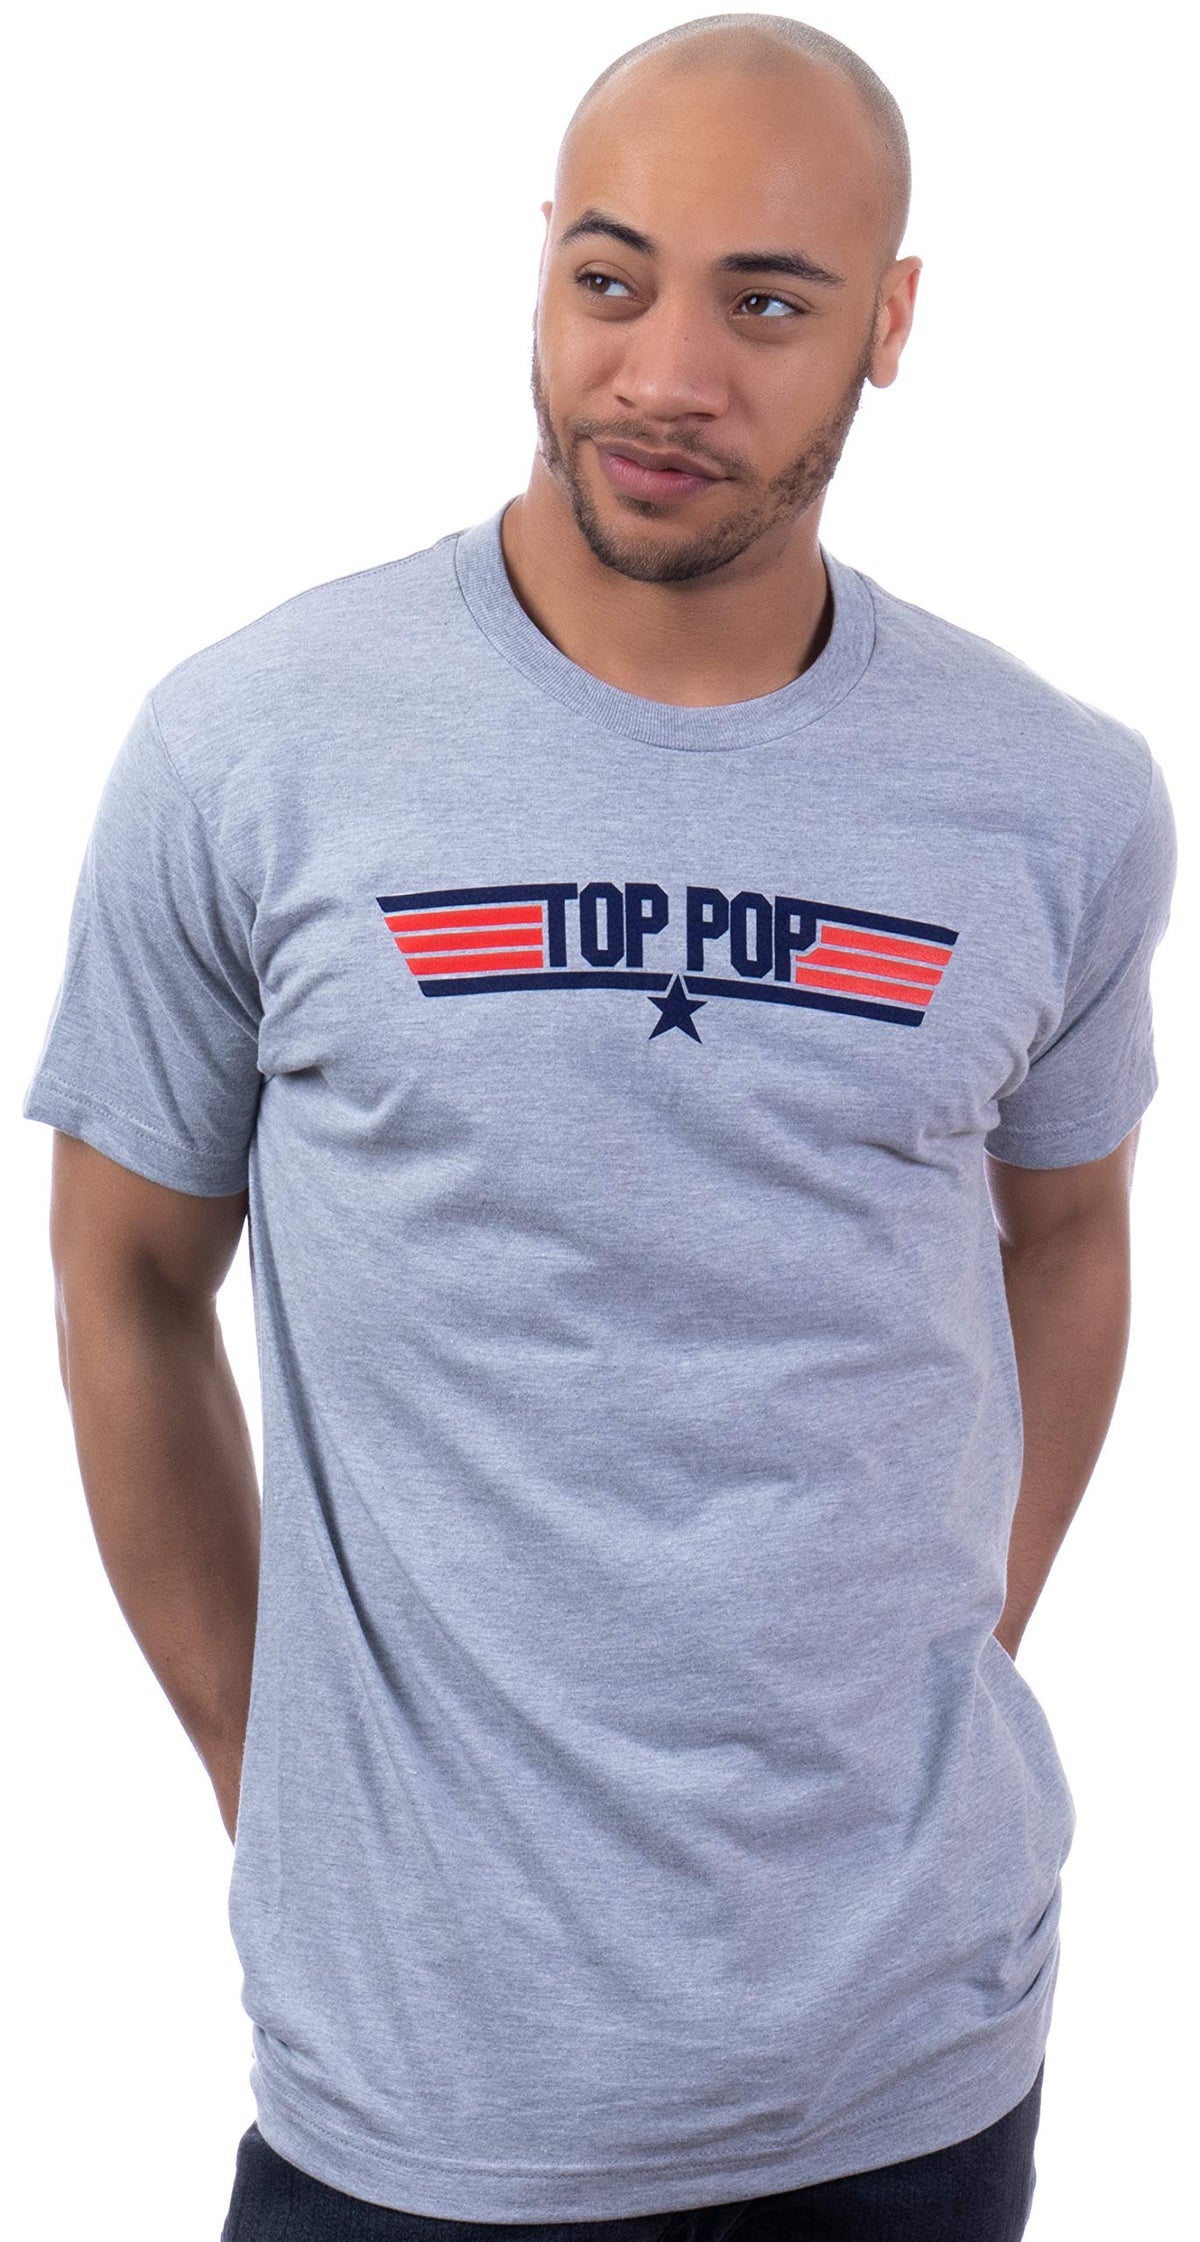 Top Pop | Funny 80s Air Dad Humor Grandpa 1980s Military Force Pops T-shirt - Men's/Uniex